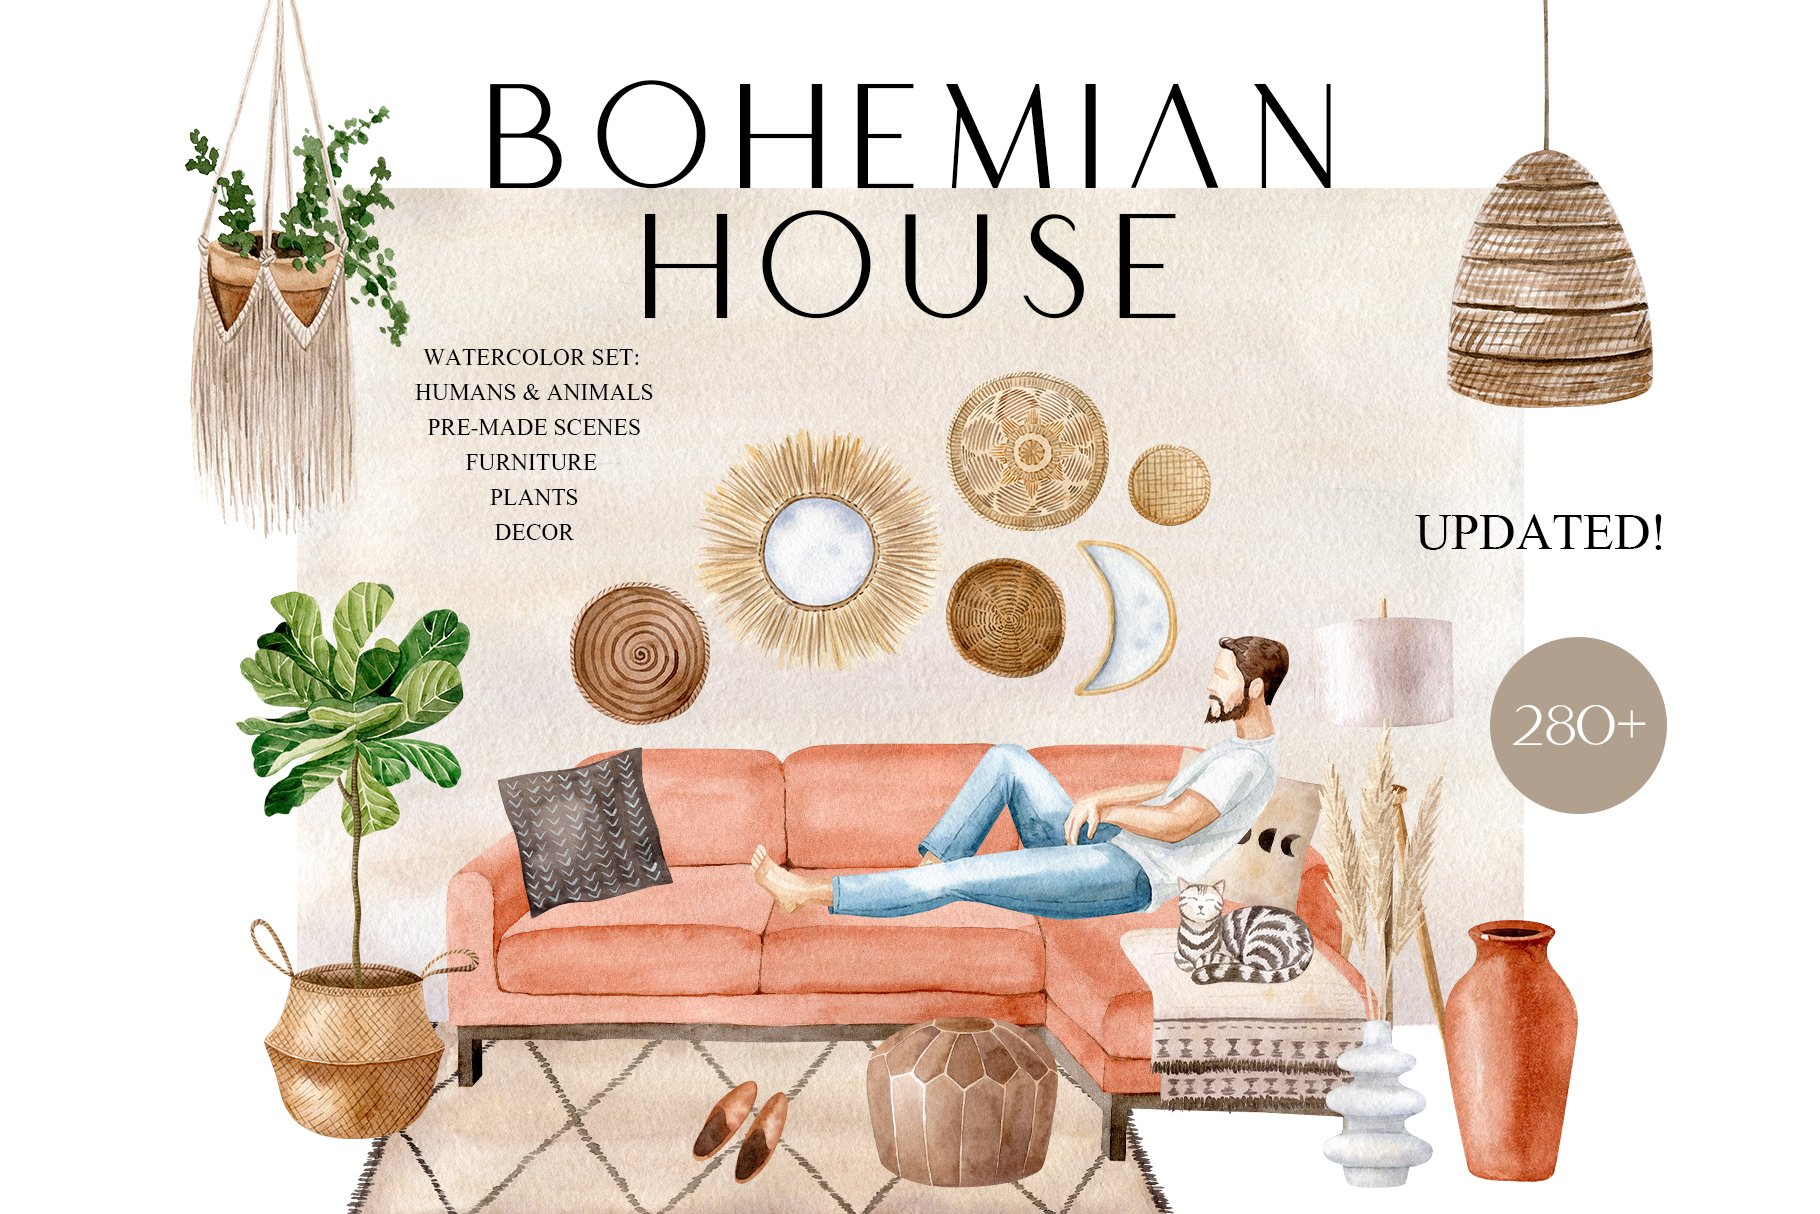 Bohemian House Watercolor Set cover image.